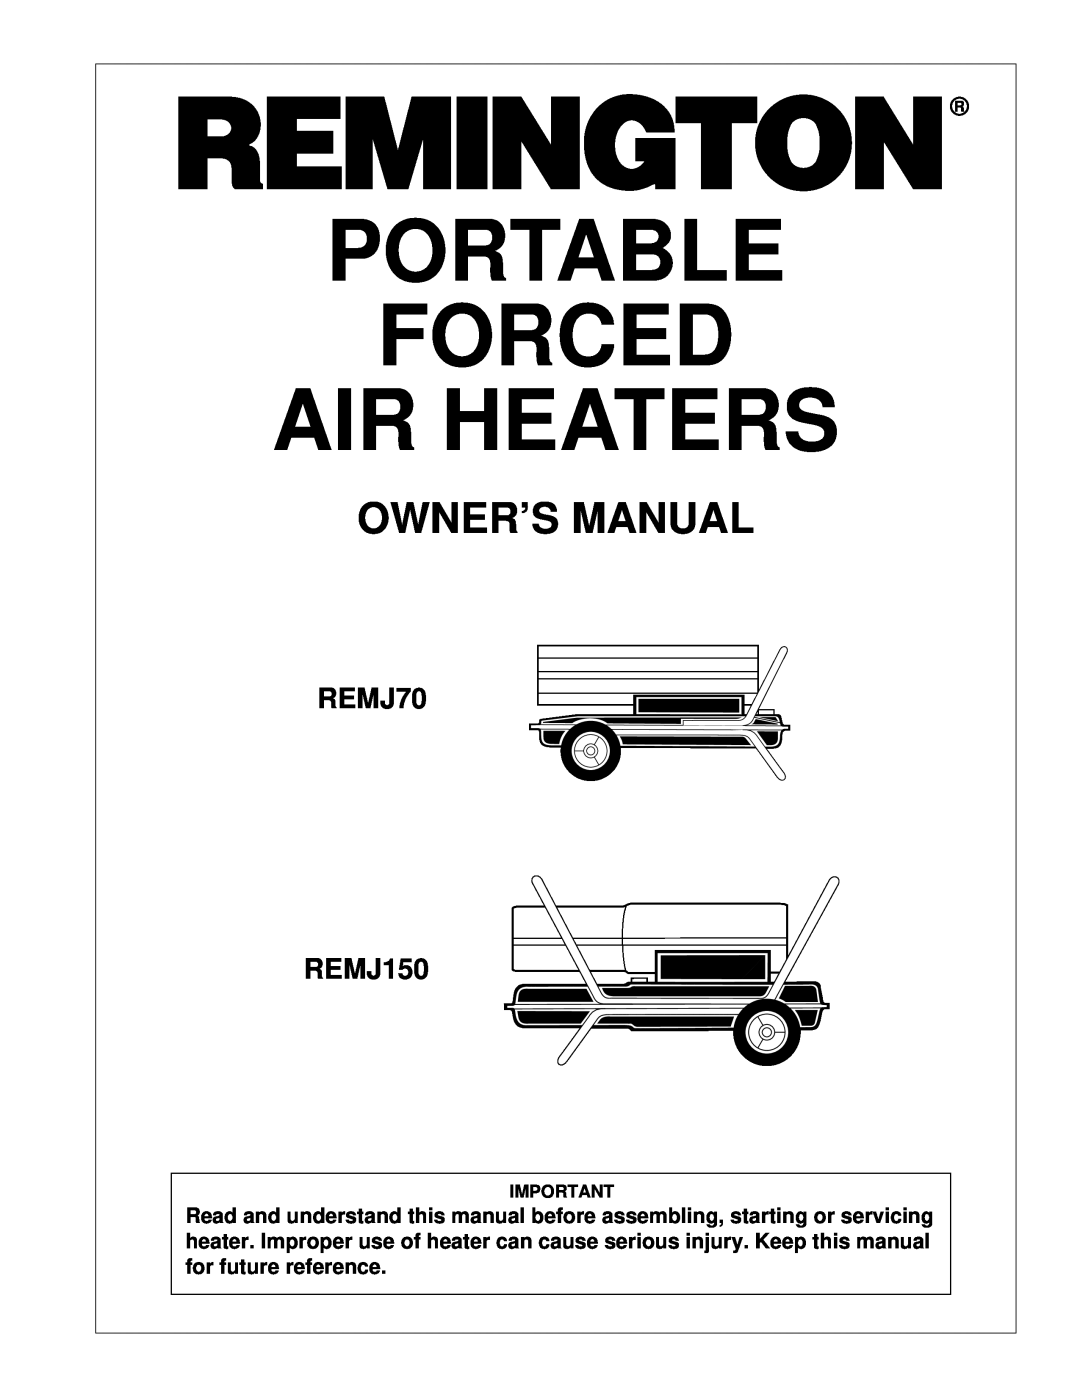 Remington owner manual REMJ70 REMJ150, Portable Forced Air Heaters, Side Handle, Pfa/Pv 